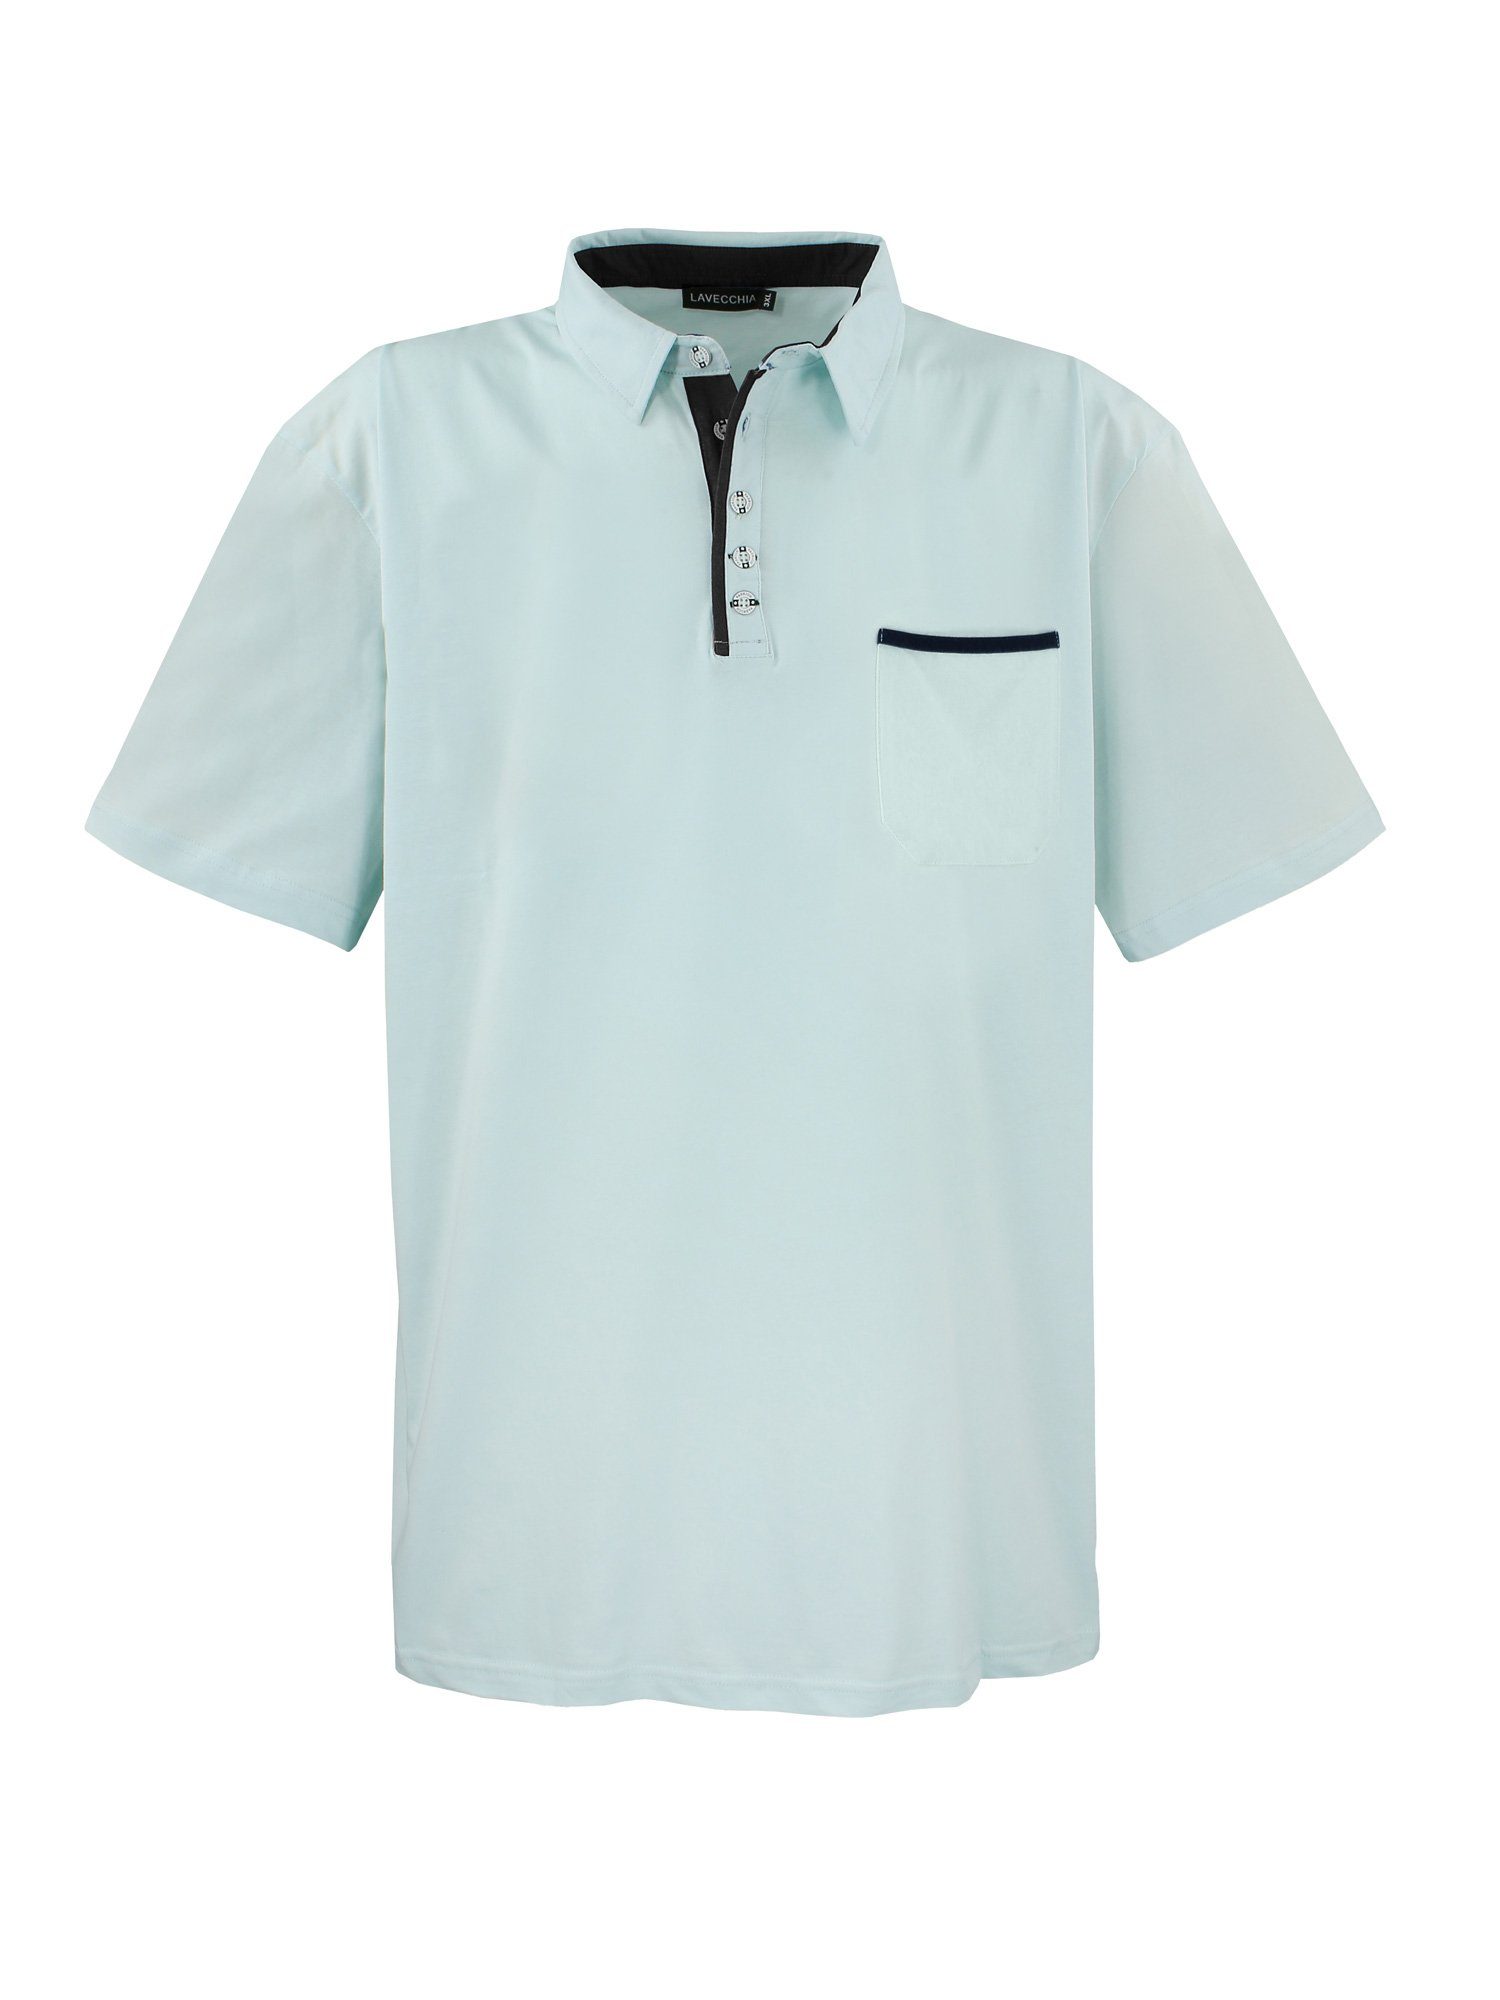 Lavecchia Poloshirt Übergrößen Herren Polo Shirt LV-1701 Herren Polo Shirt mint